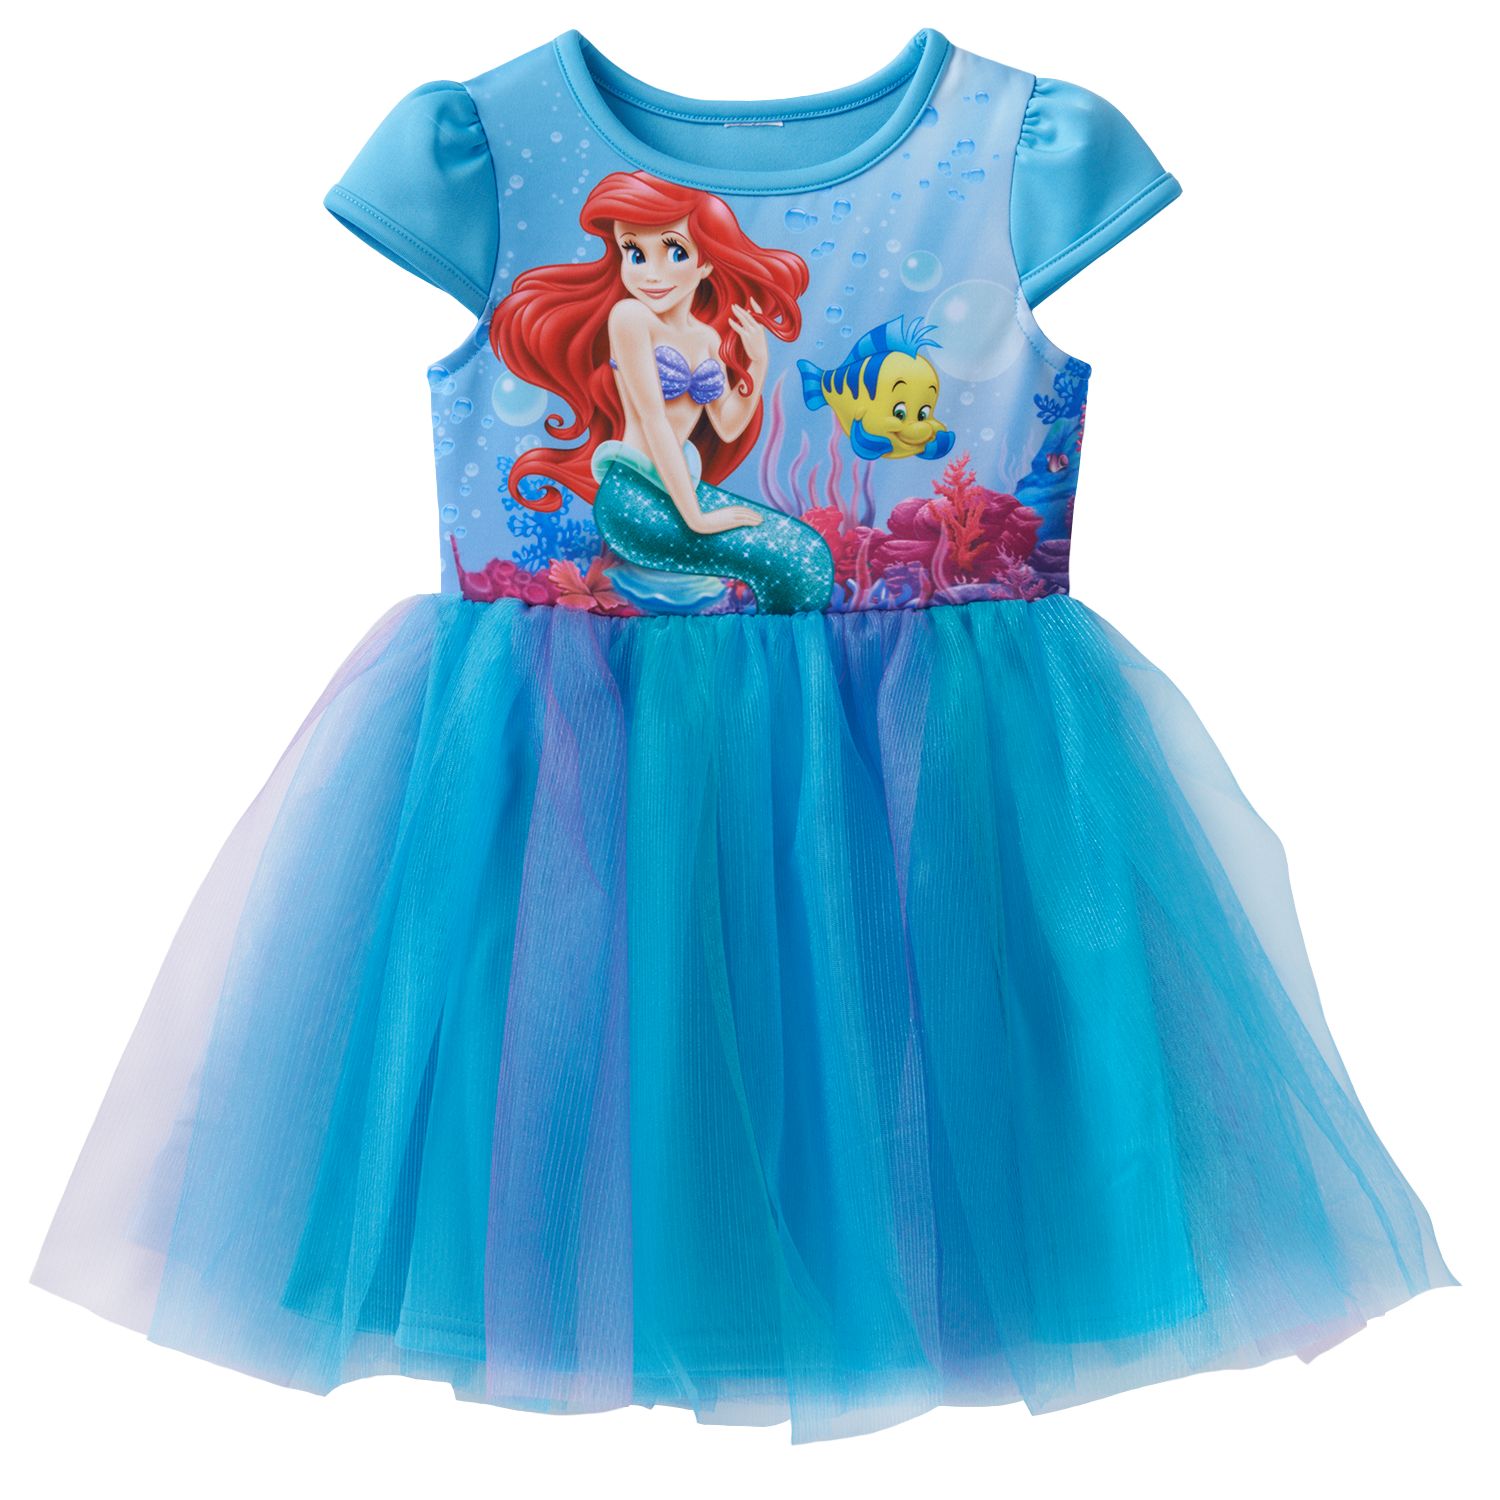 the little mermaid dress